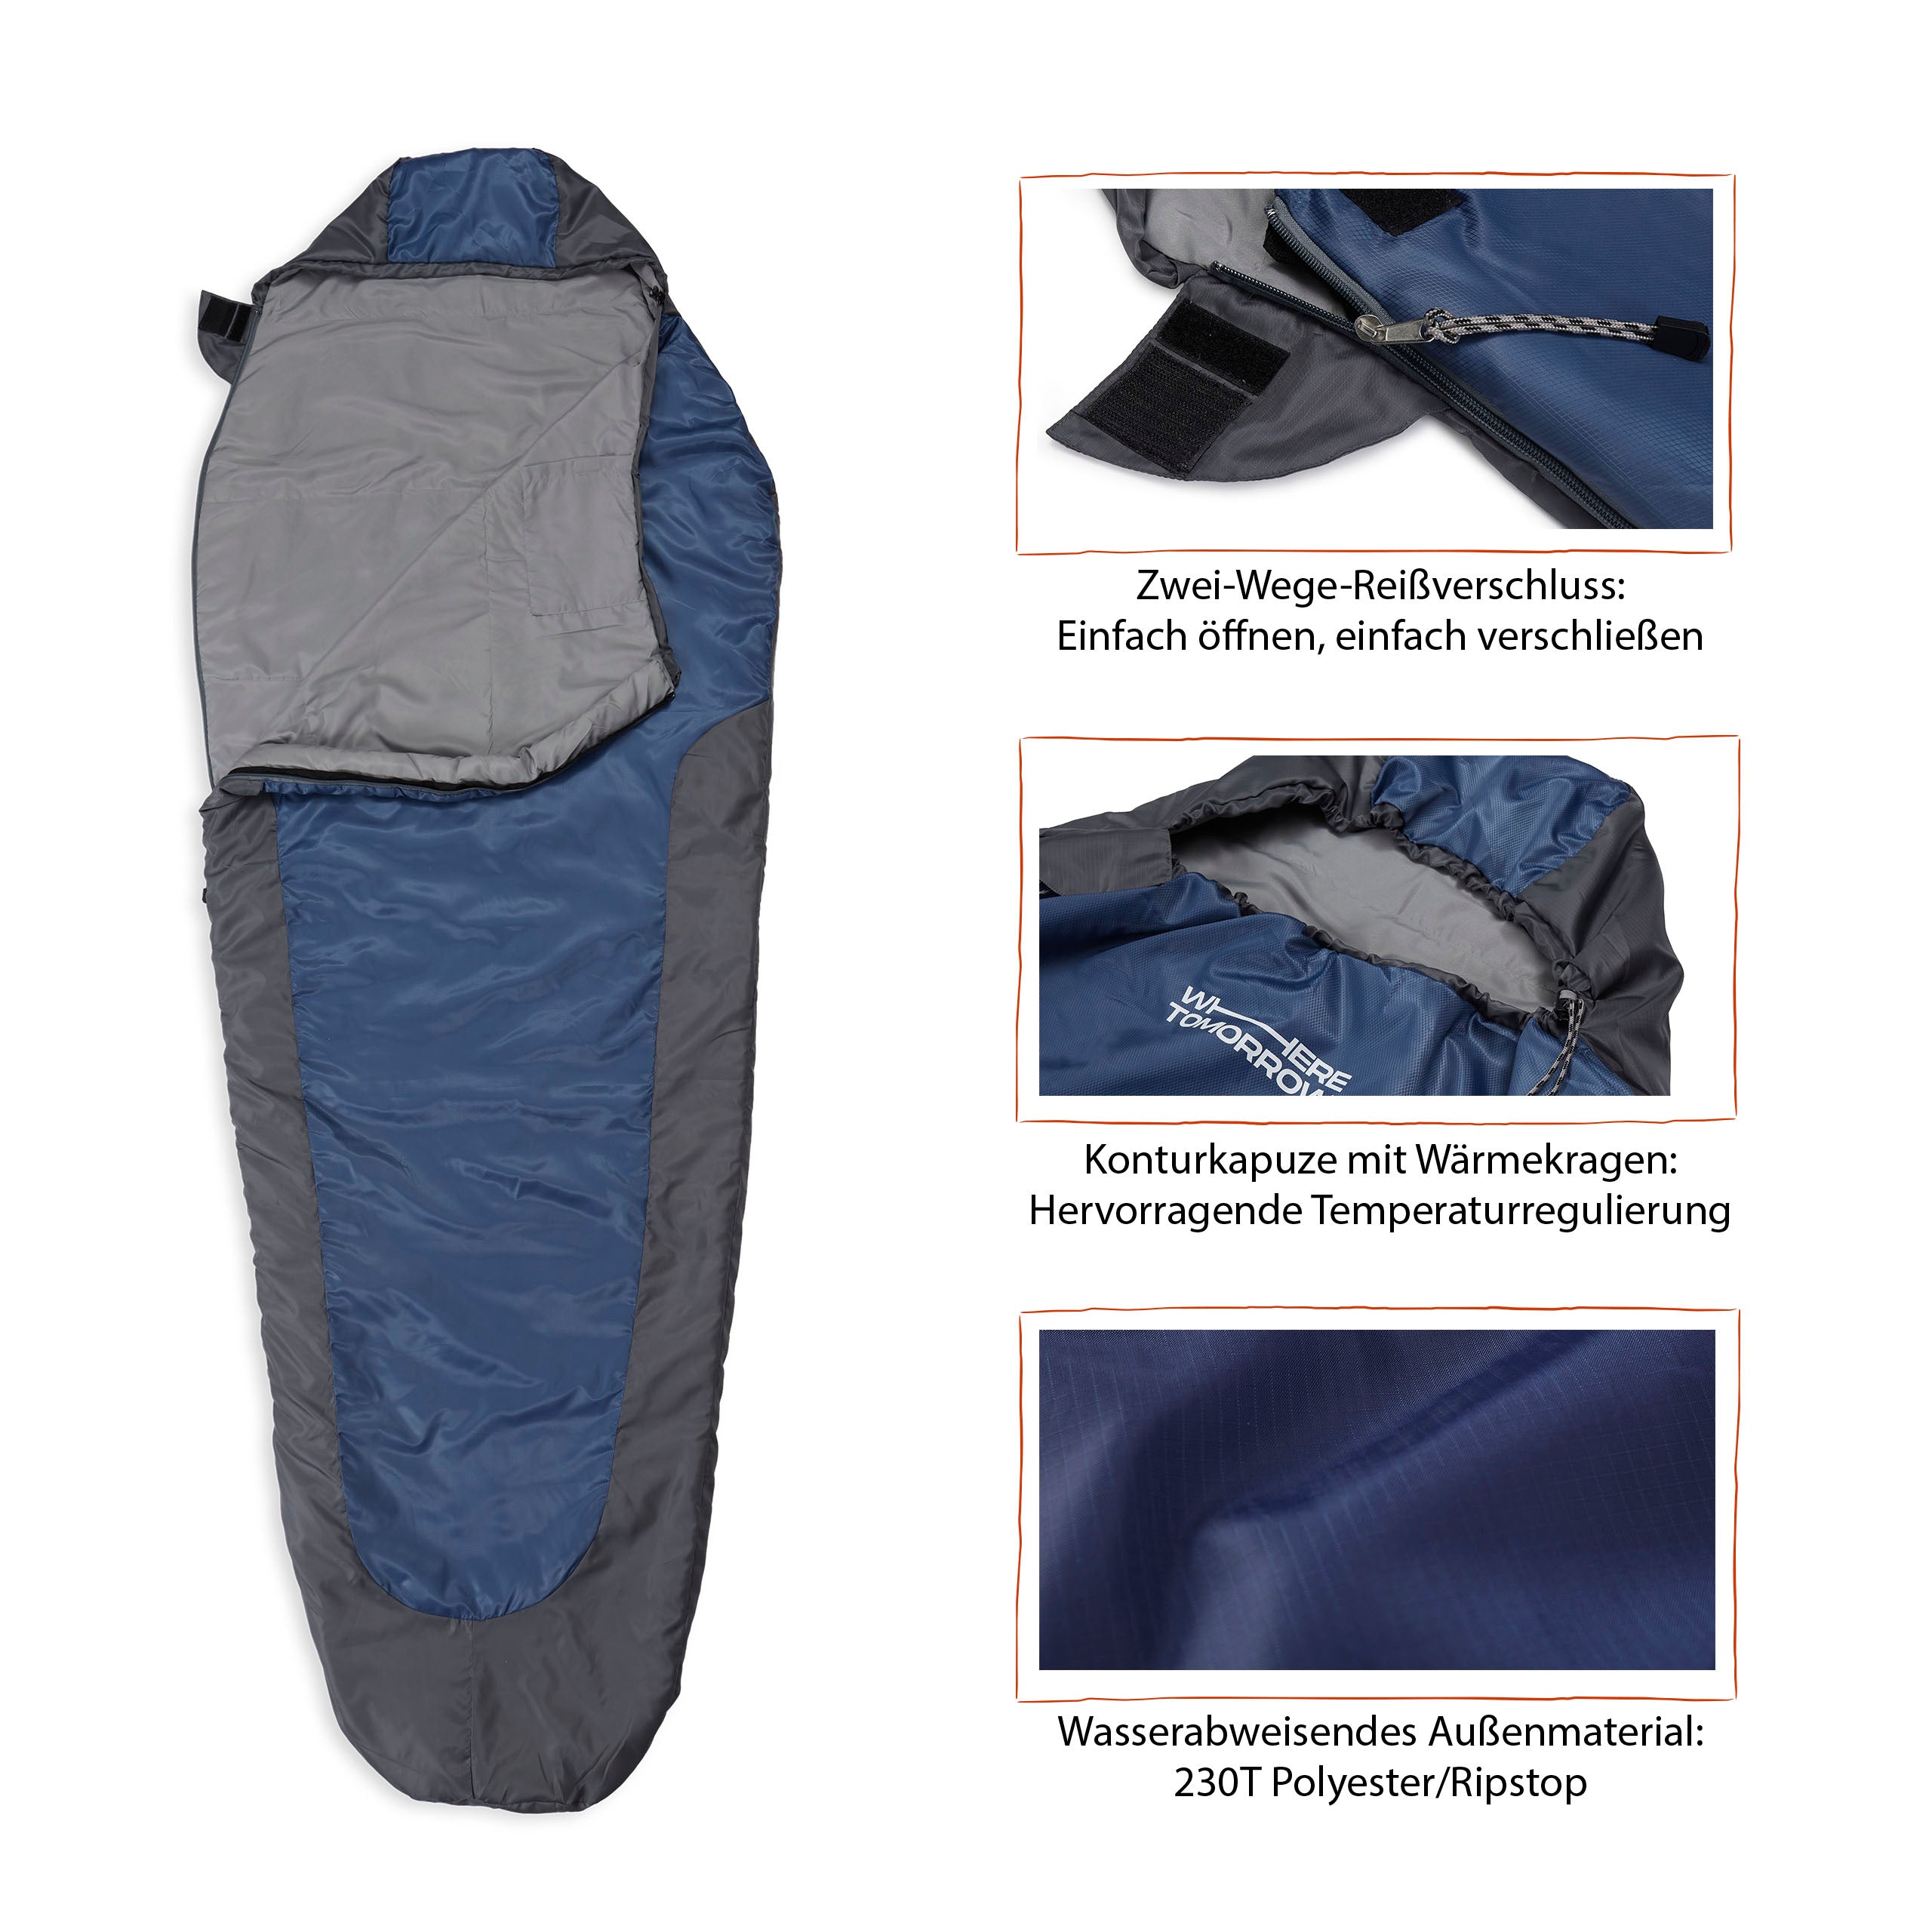 Camping Schlafsack Small & Light - Mumienschlafsack mit Tasche - 220 x 80 x 50 cm - Grau-Navyblau